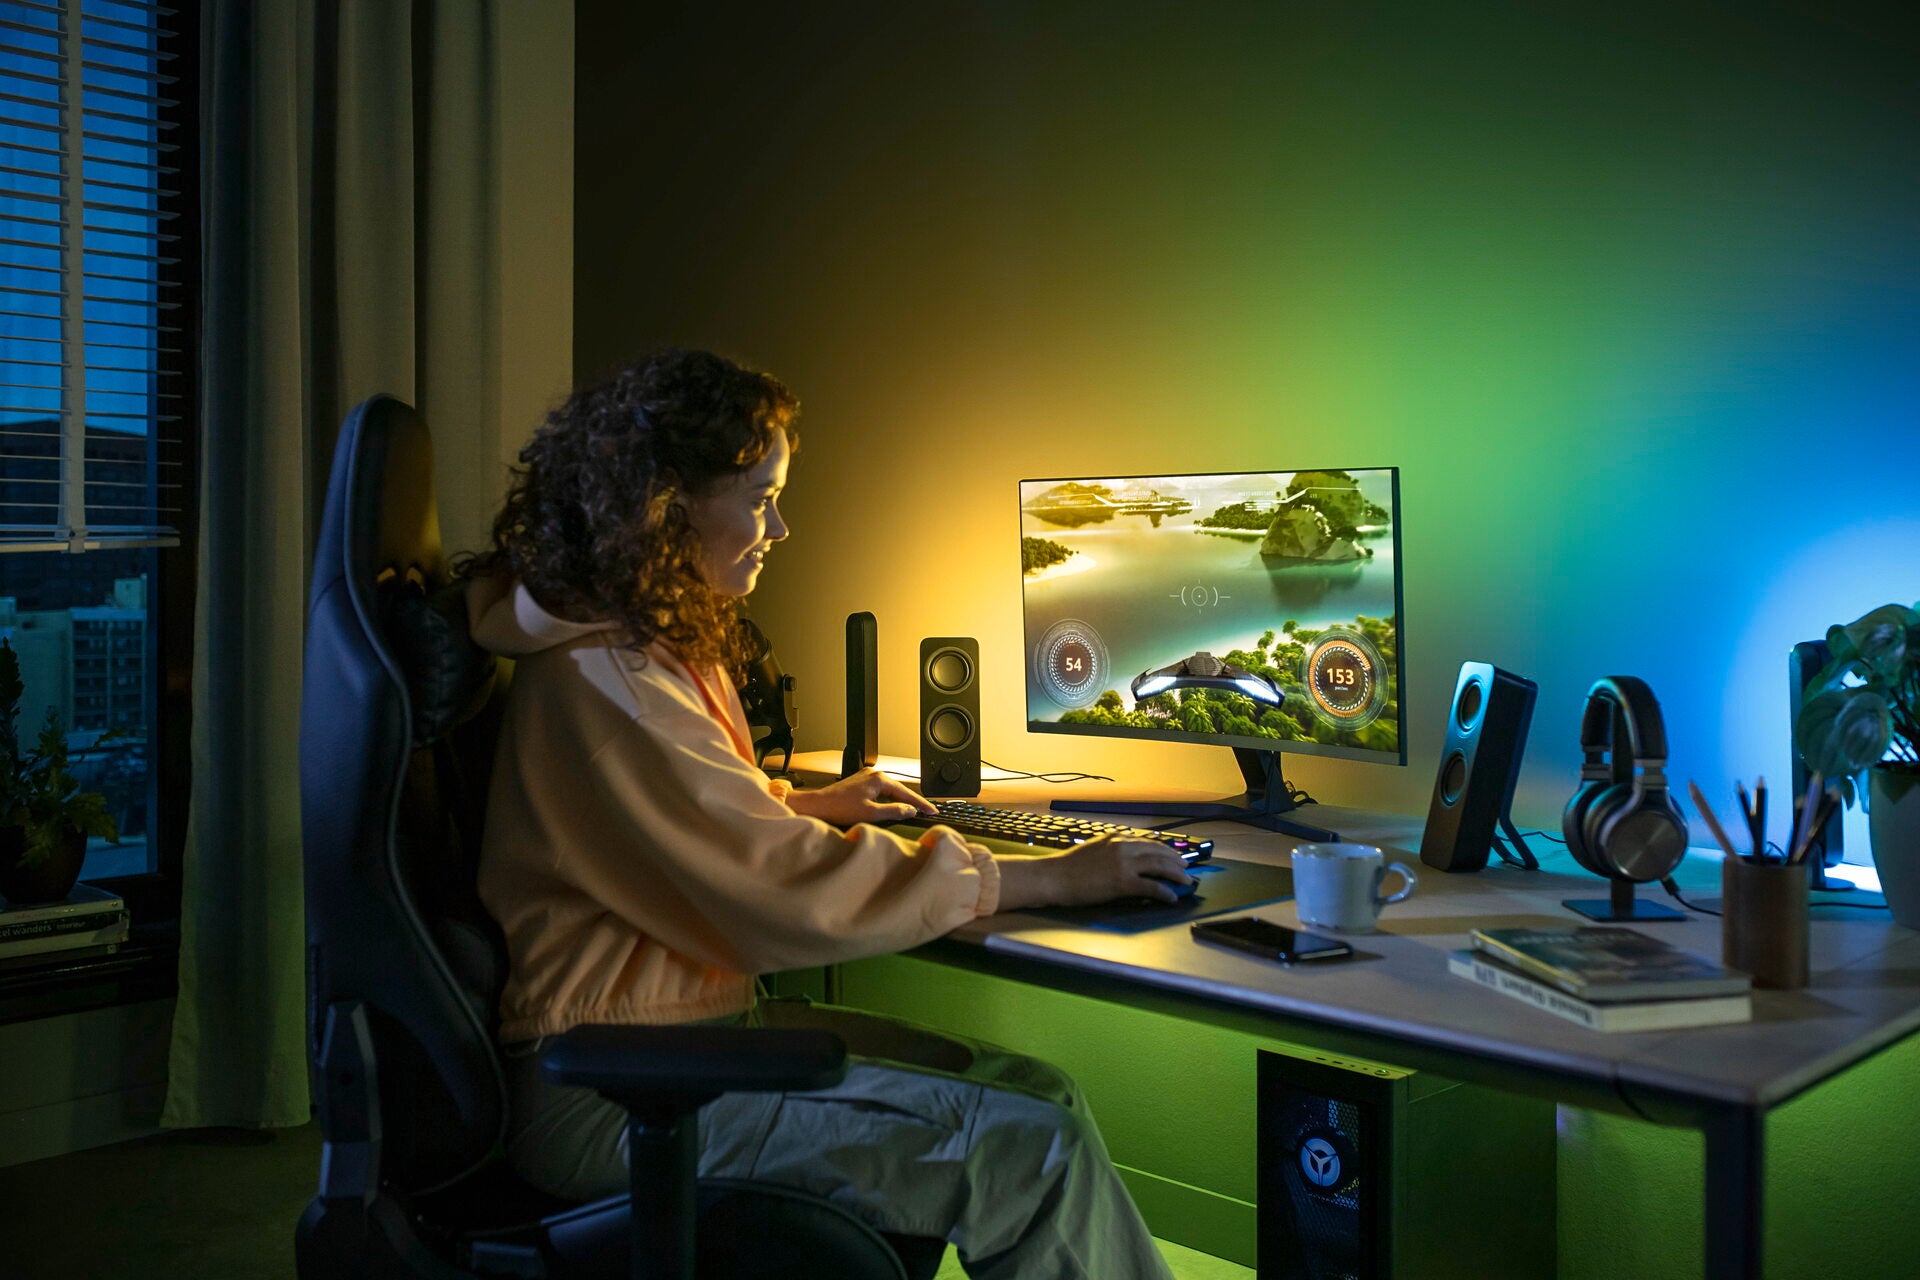 Philips Hue Play Gradient PC Lightstrip 24/27”